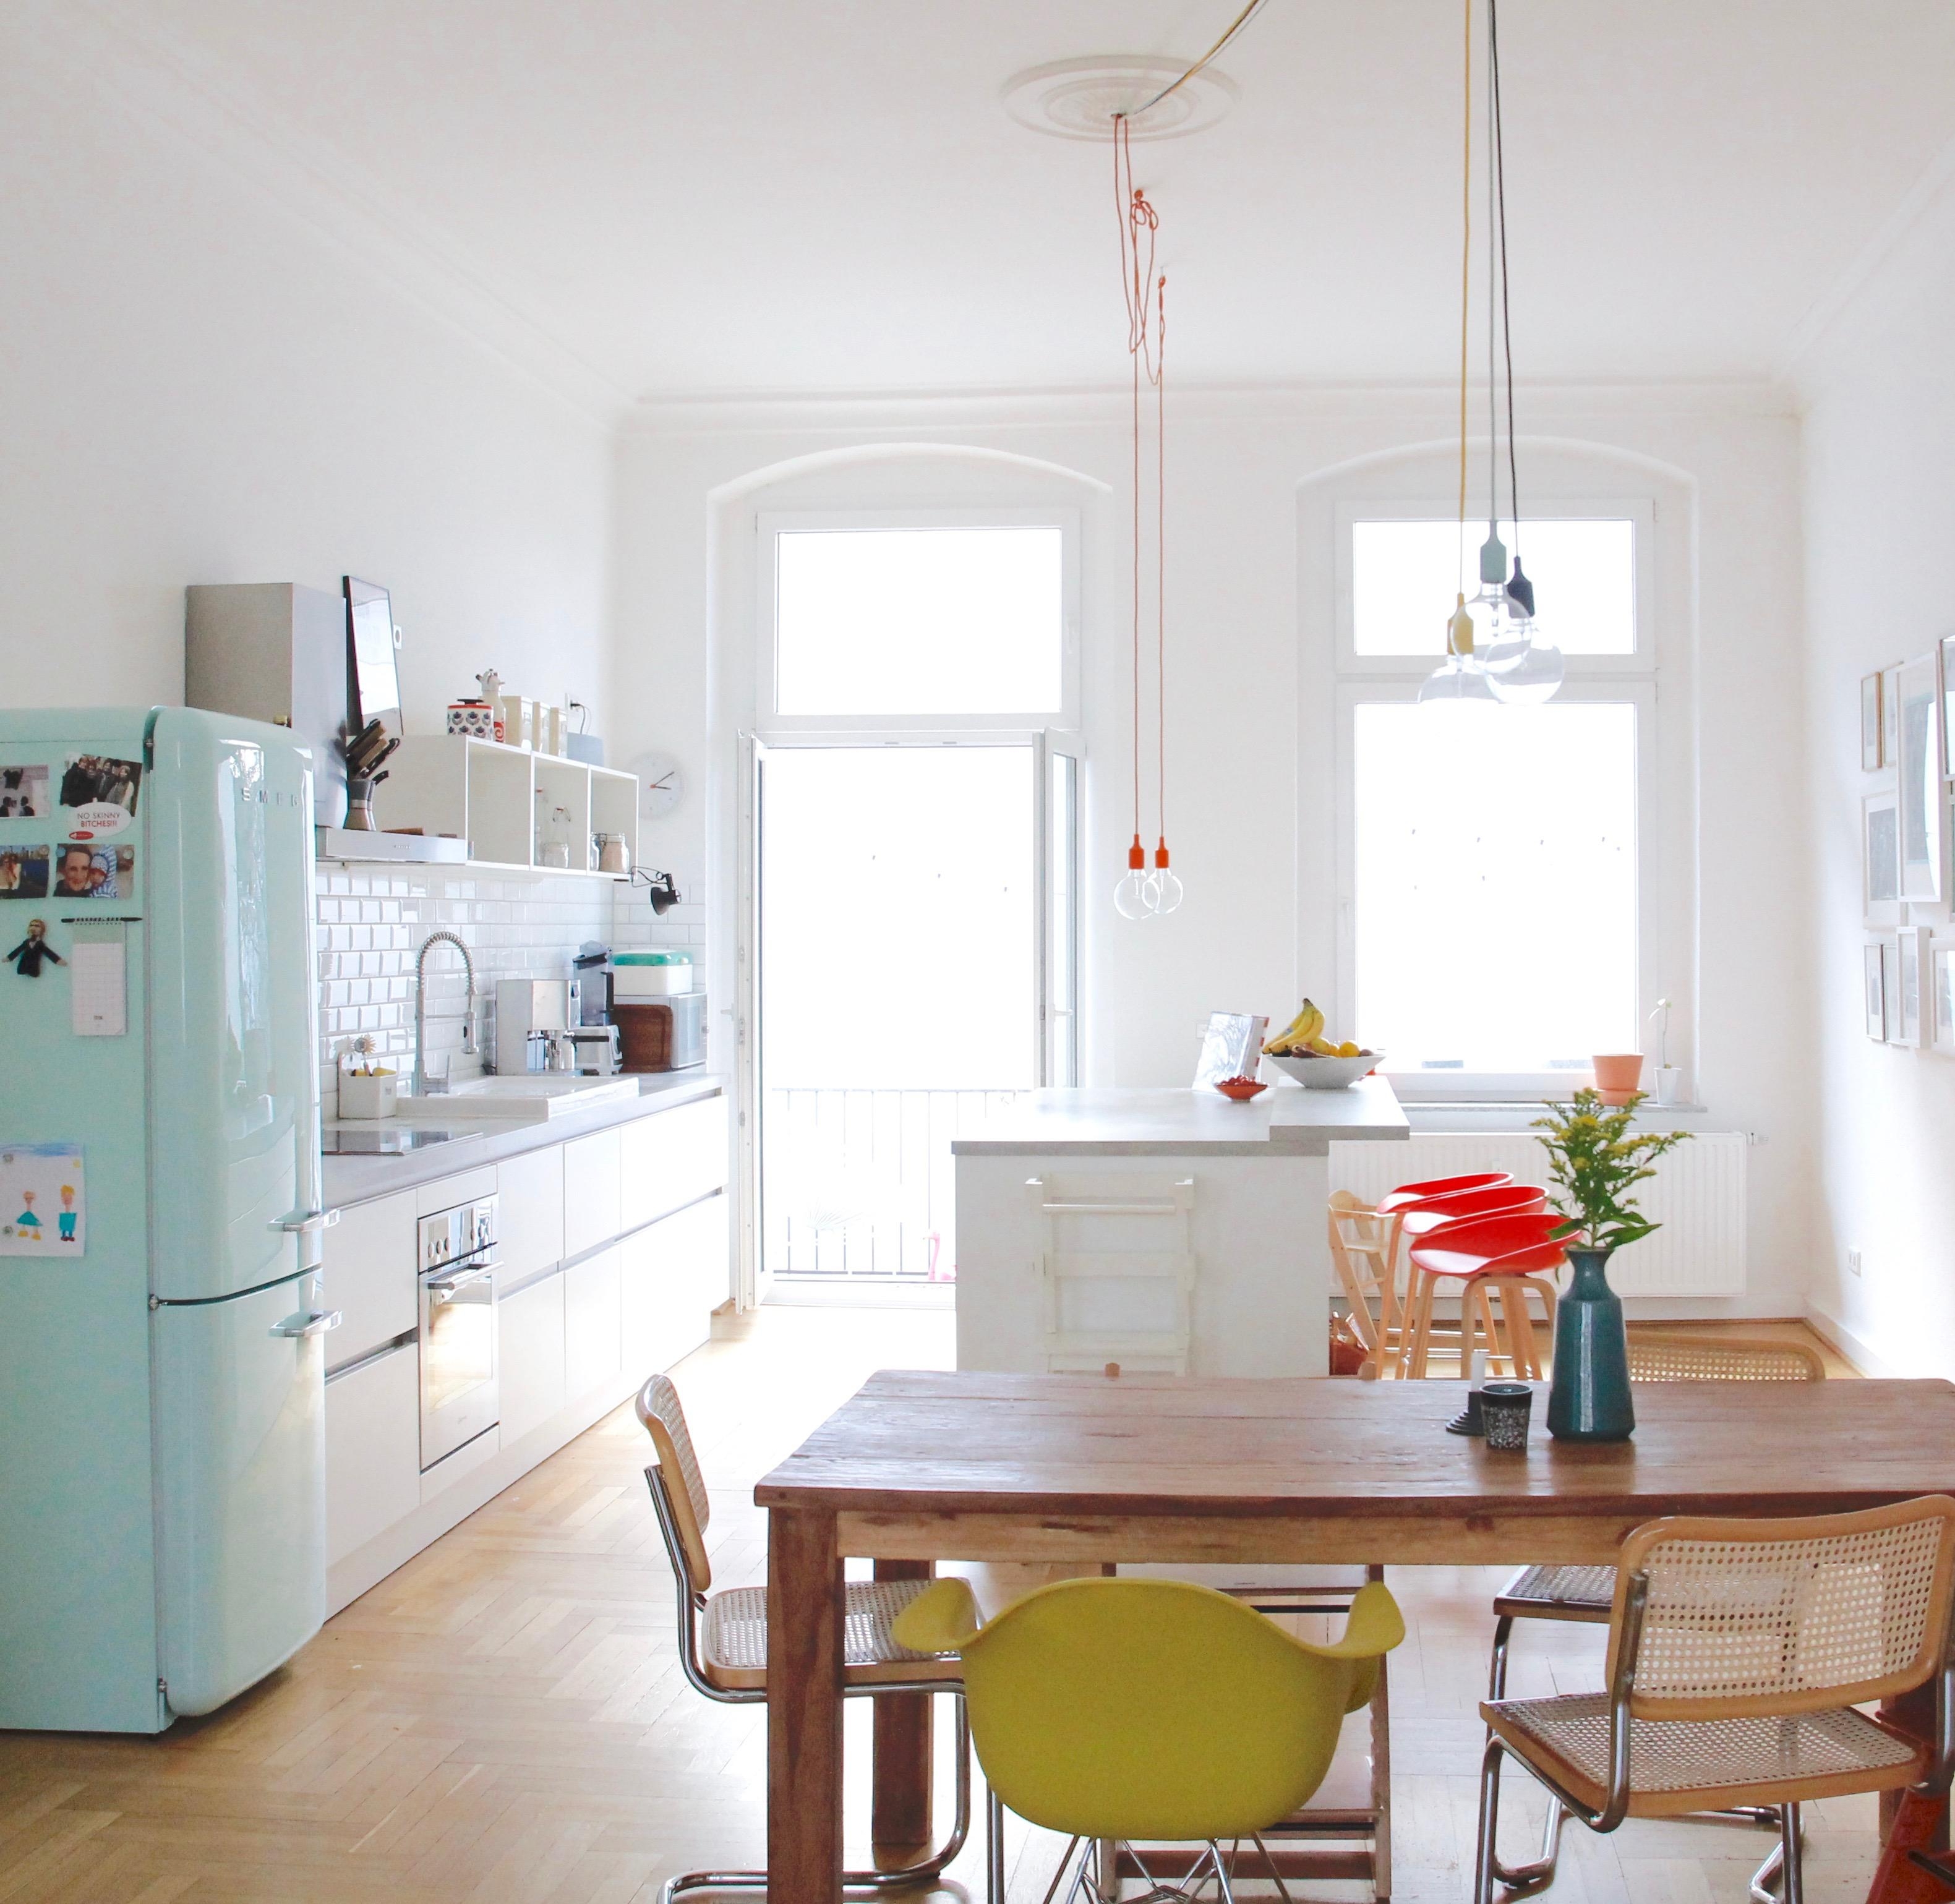 Social kitchen
#smeg #eames #küche #altbau